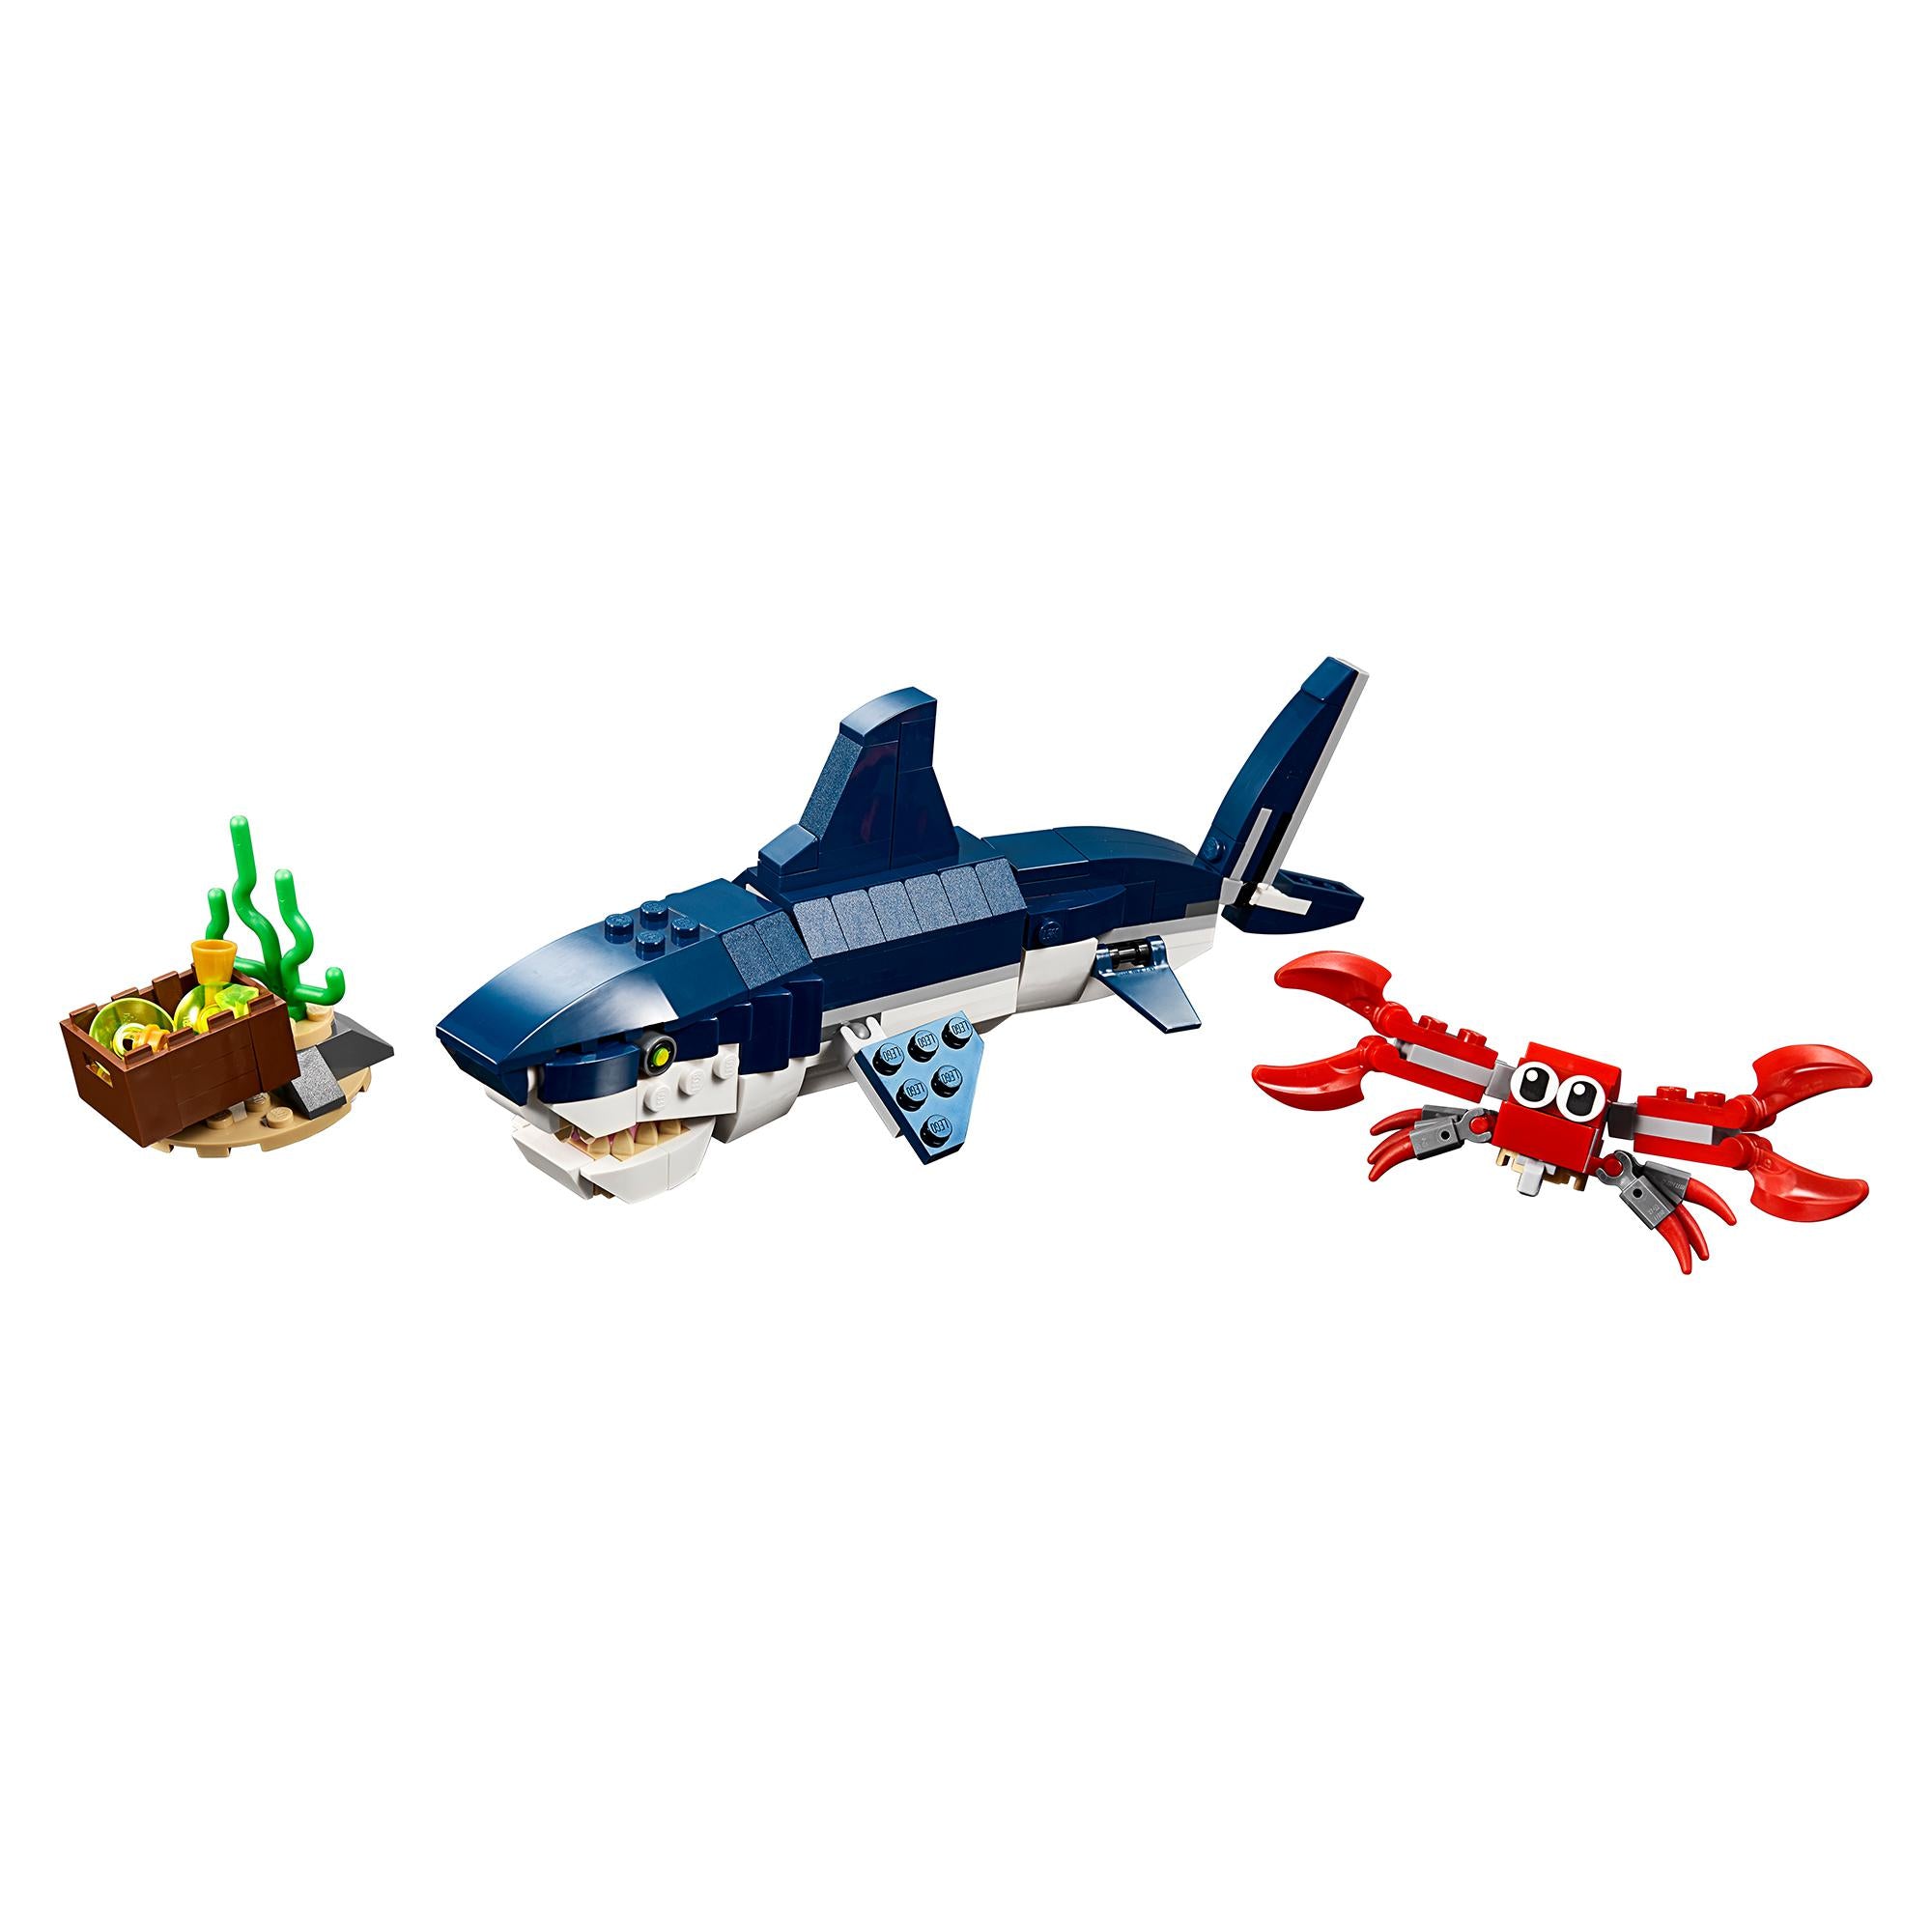 LEGO® Creator 3in1 Deep Sea Creatures Shark Set 31088 Default Title